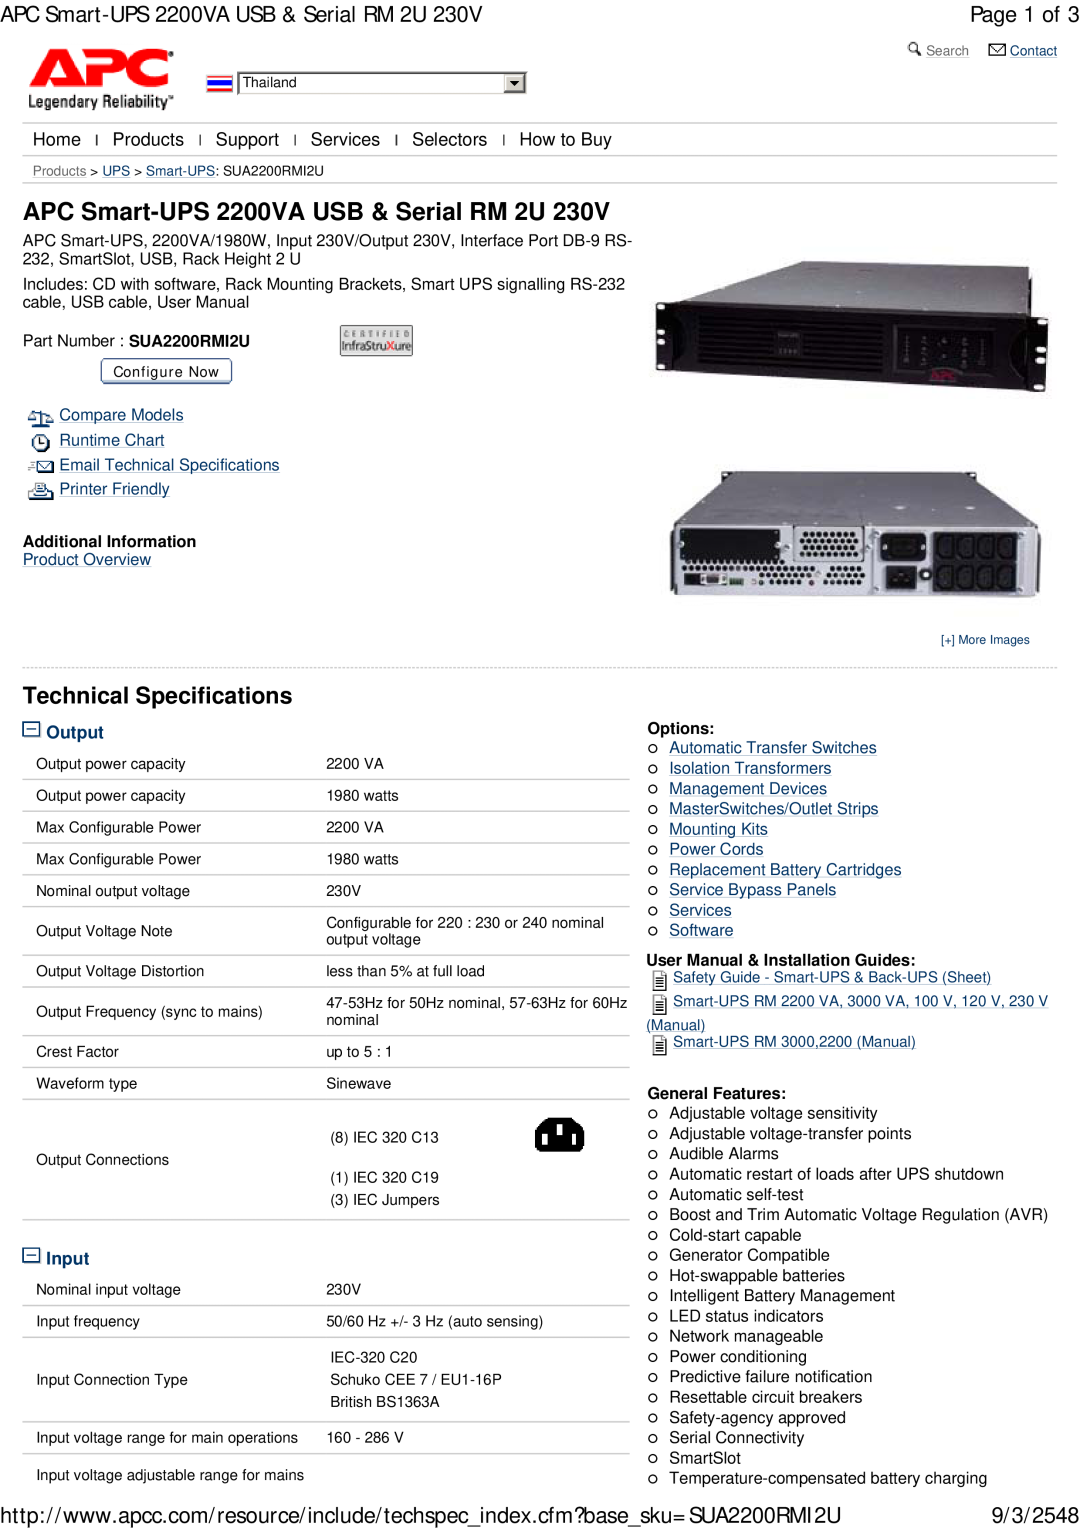 APC RM 2U 230V technical specifications APC Smart-UPS 2200VA USB & Serial RM 2U, Page 1 of, Output, Input, Software 